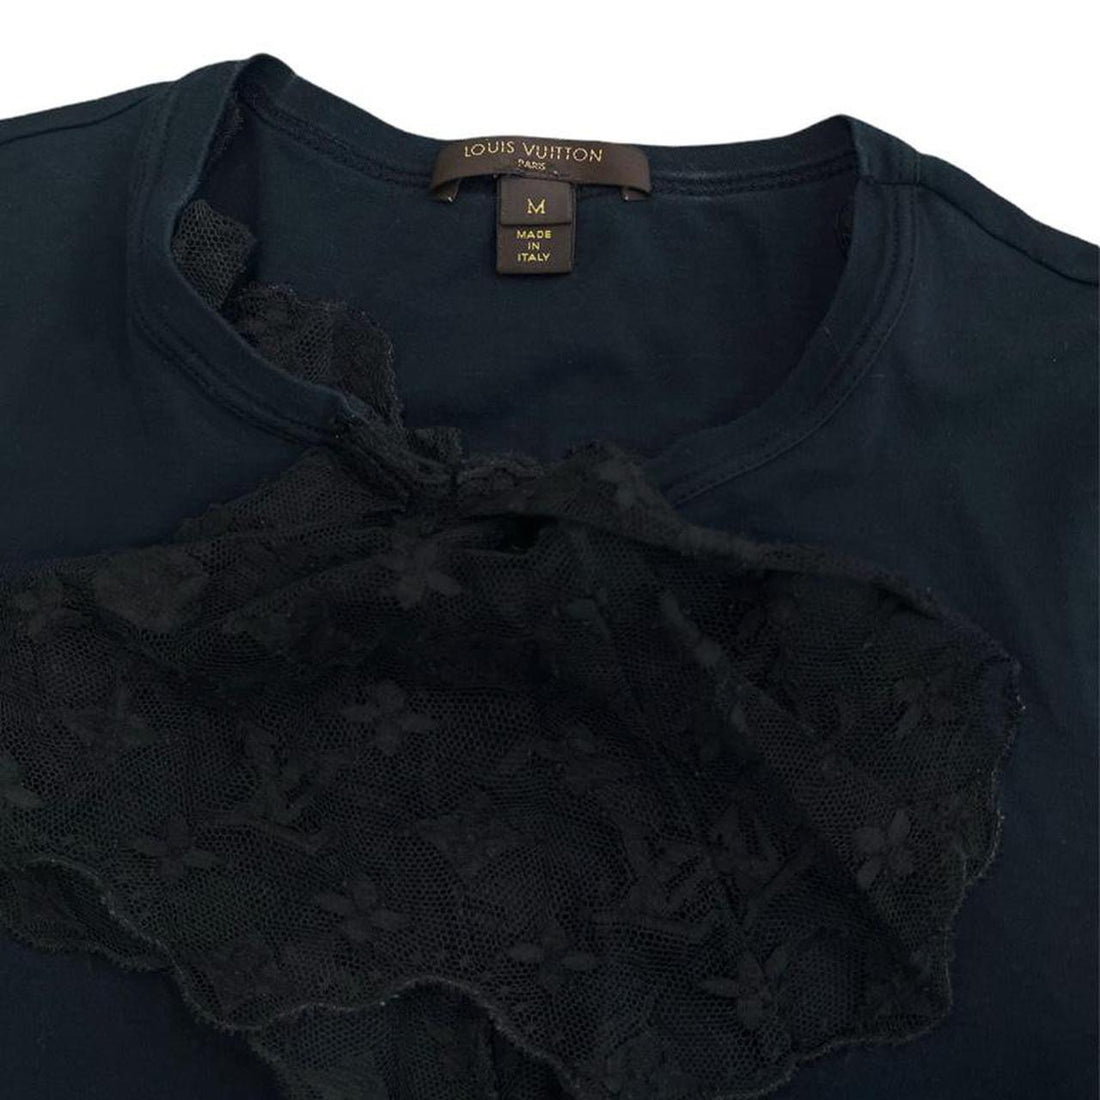 Louis Vuitton black Damier print ruffle top